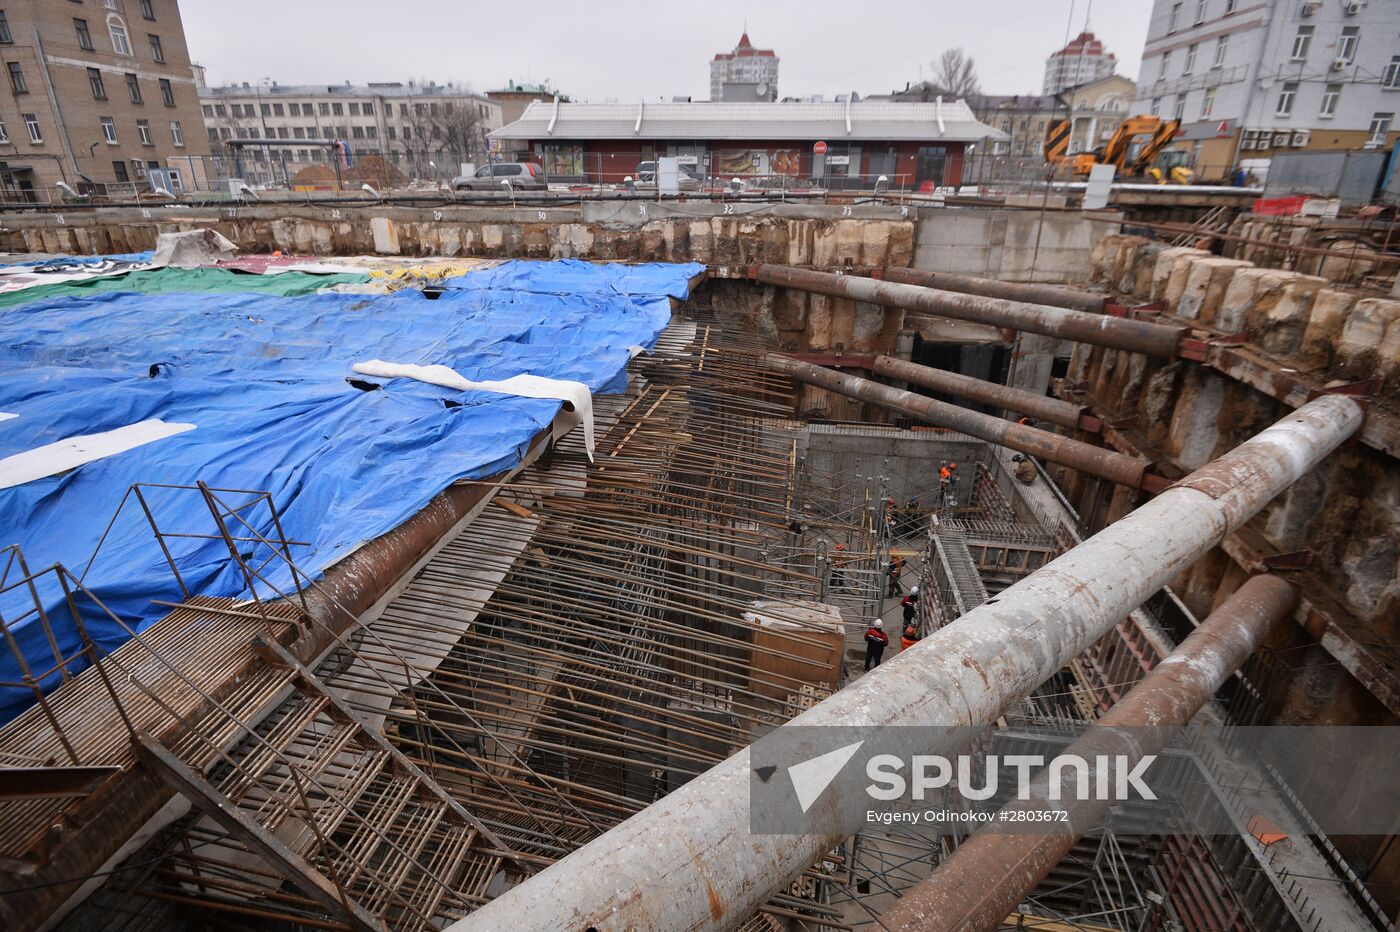 Third Interchange Circuit's Khoroshevskaya metro station construction site